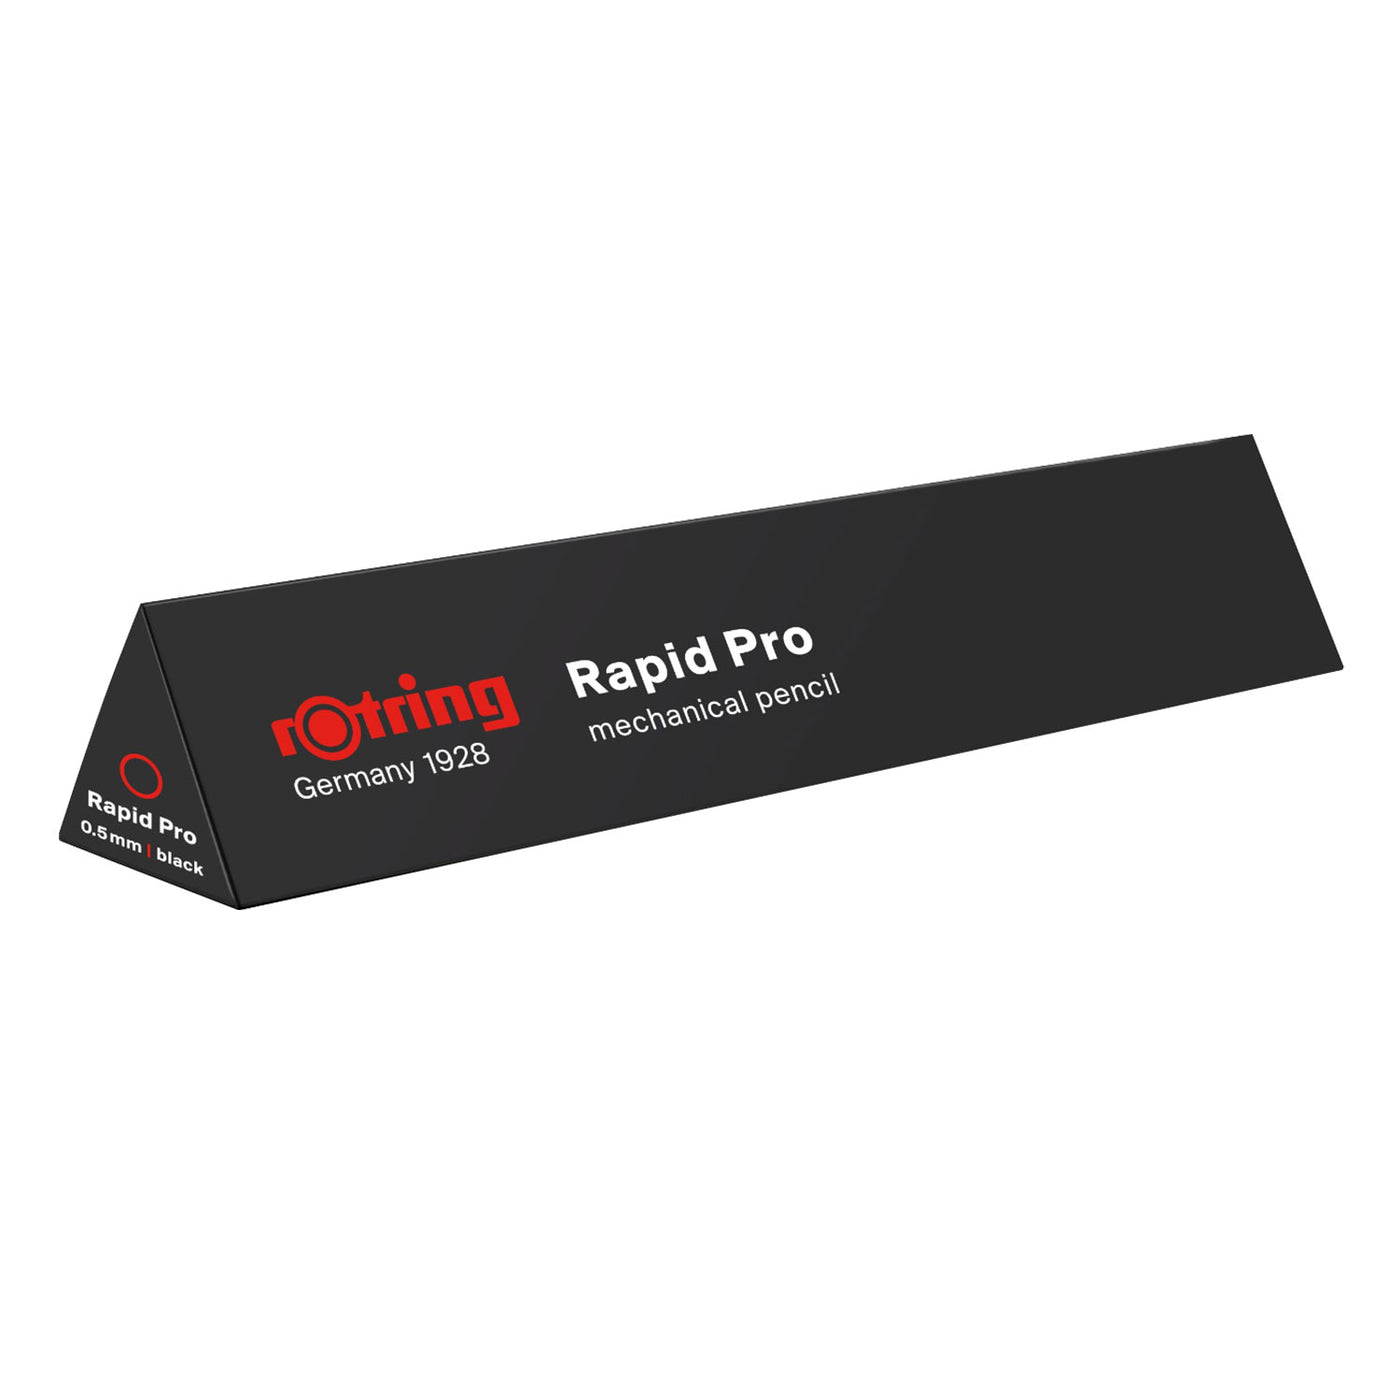 Rotring Rapid Pro 0.5mm Mechanical Pencil - Black 5